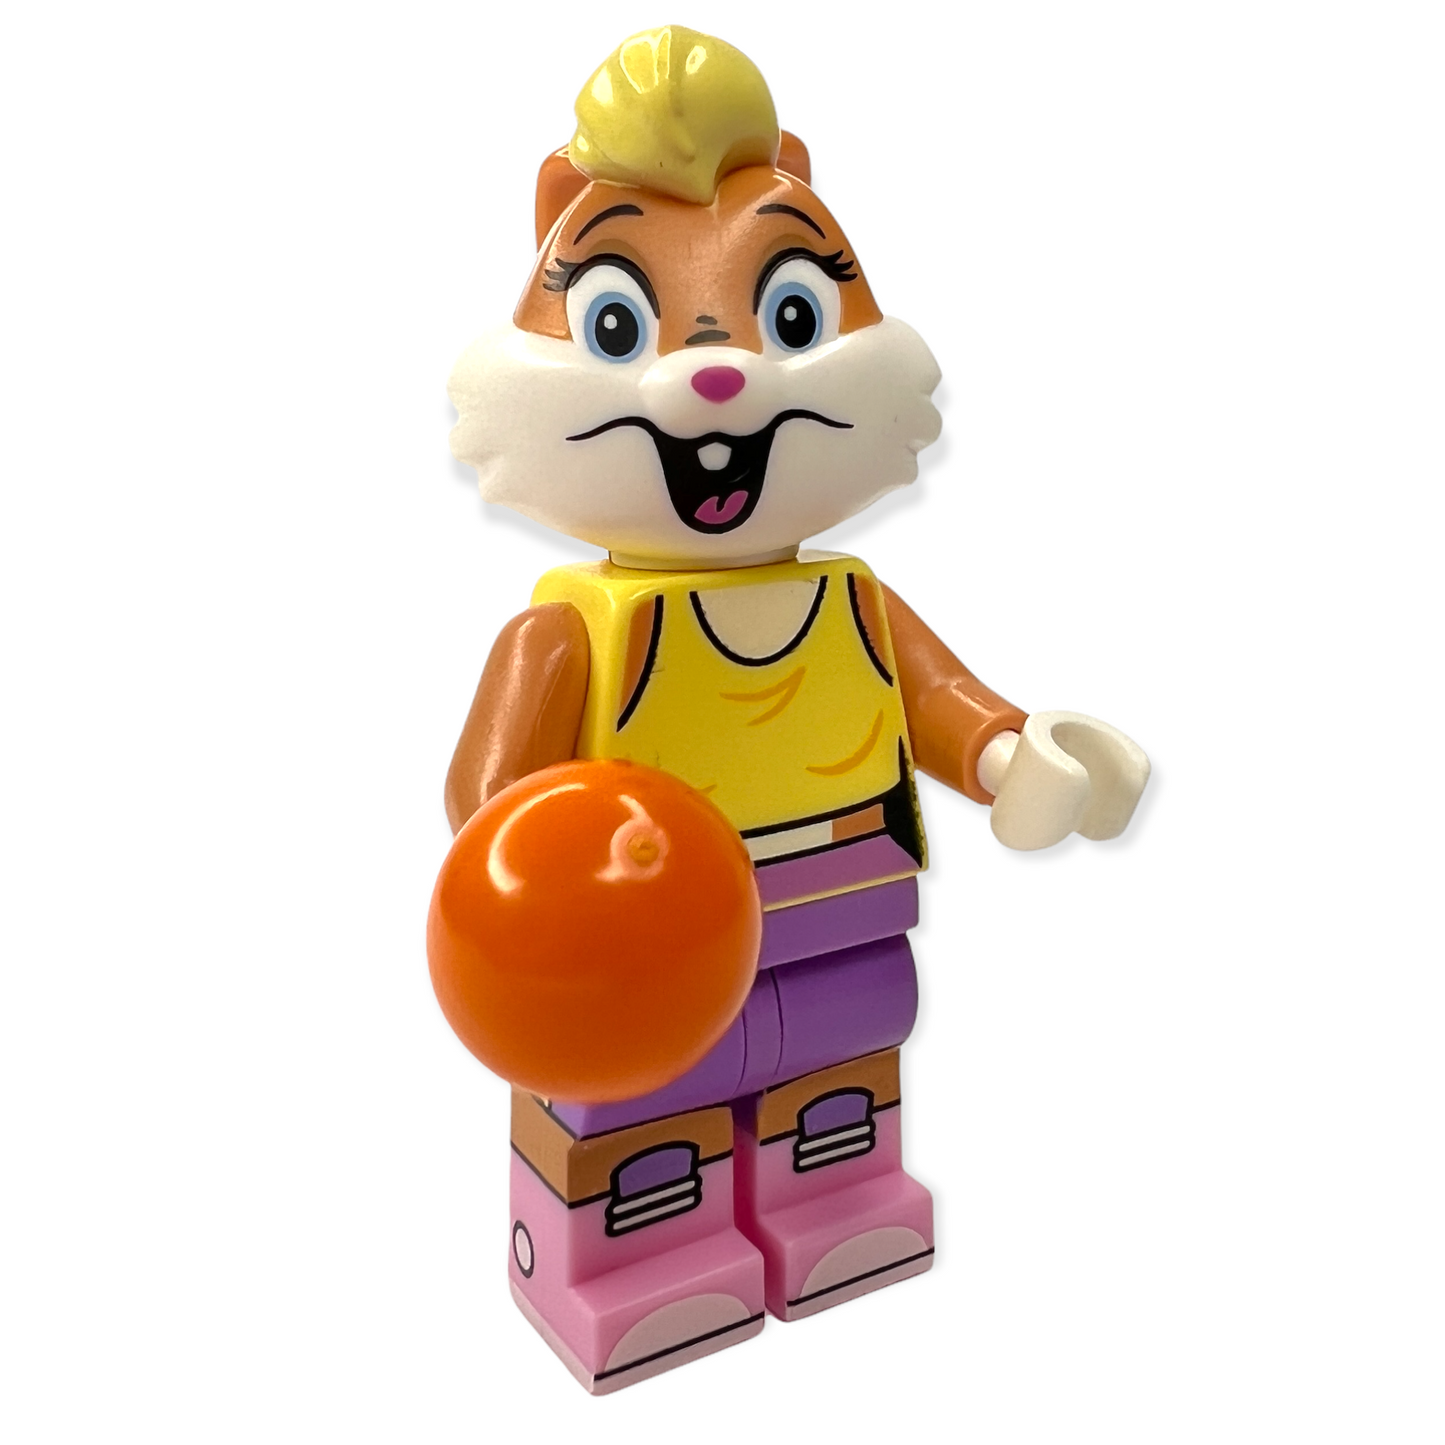 LEGO Minifigur "Lola Bunny" 71030